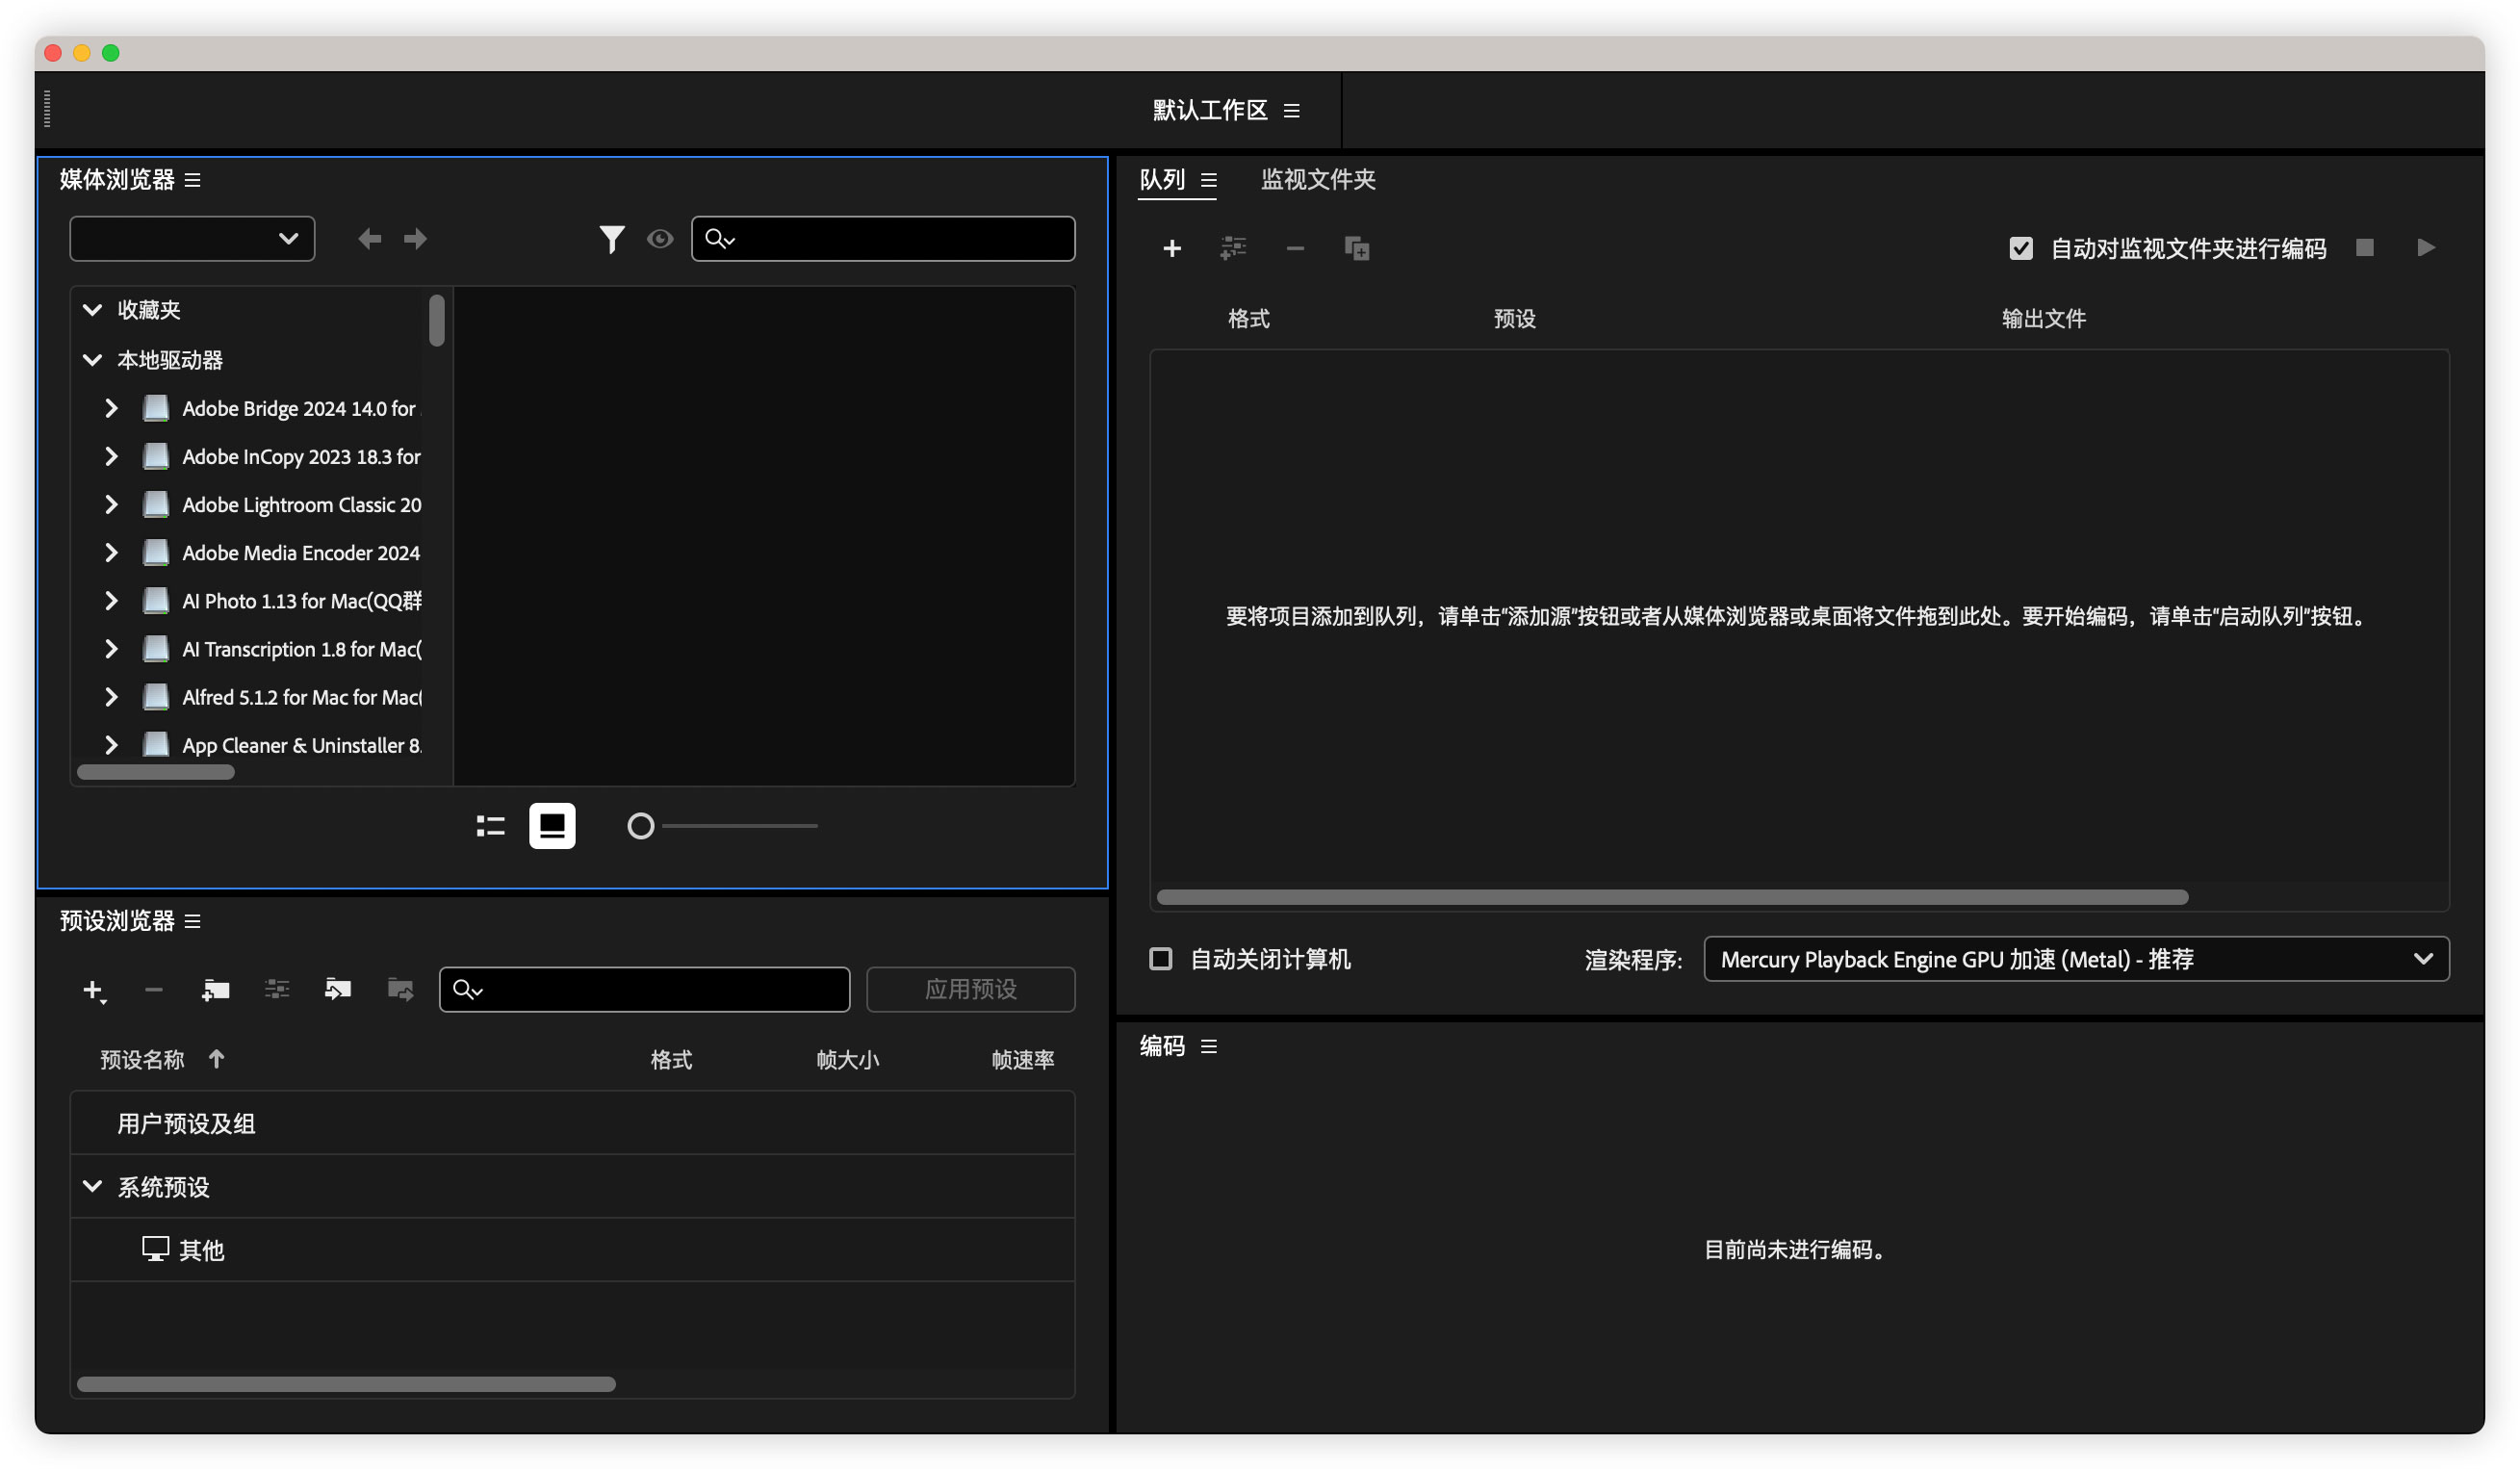 Adobe Media Encoder 2024 v24.0.2.2 download the last version for ipod